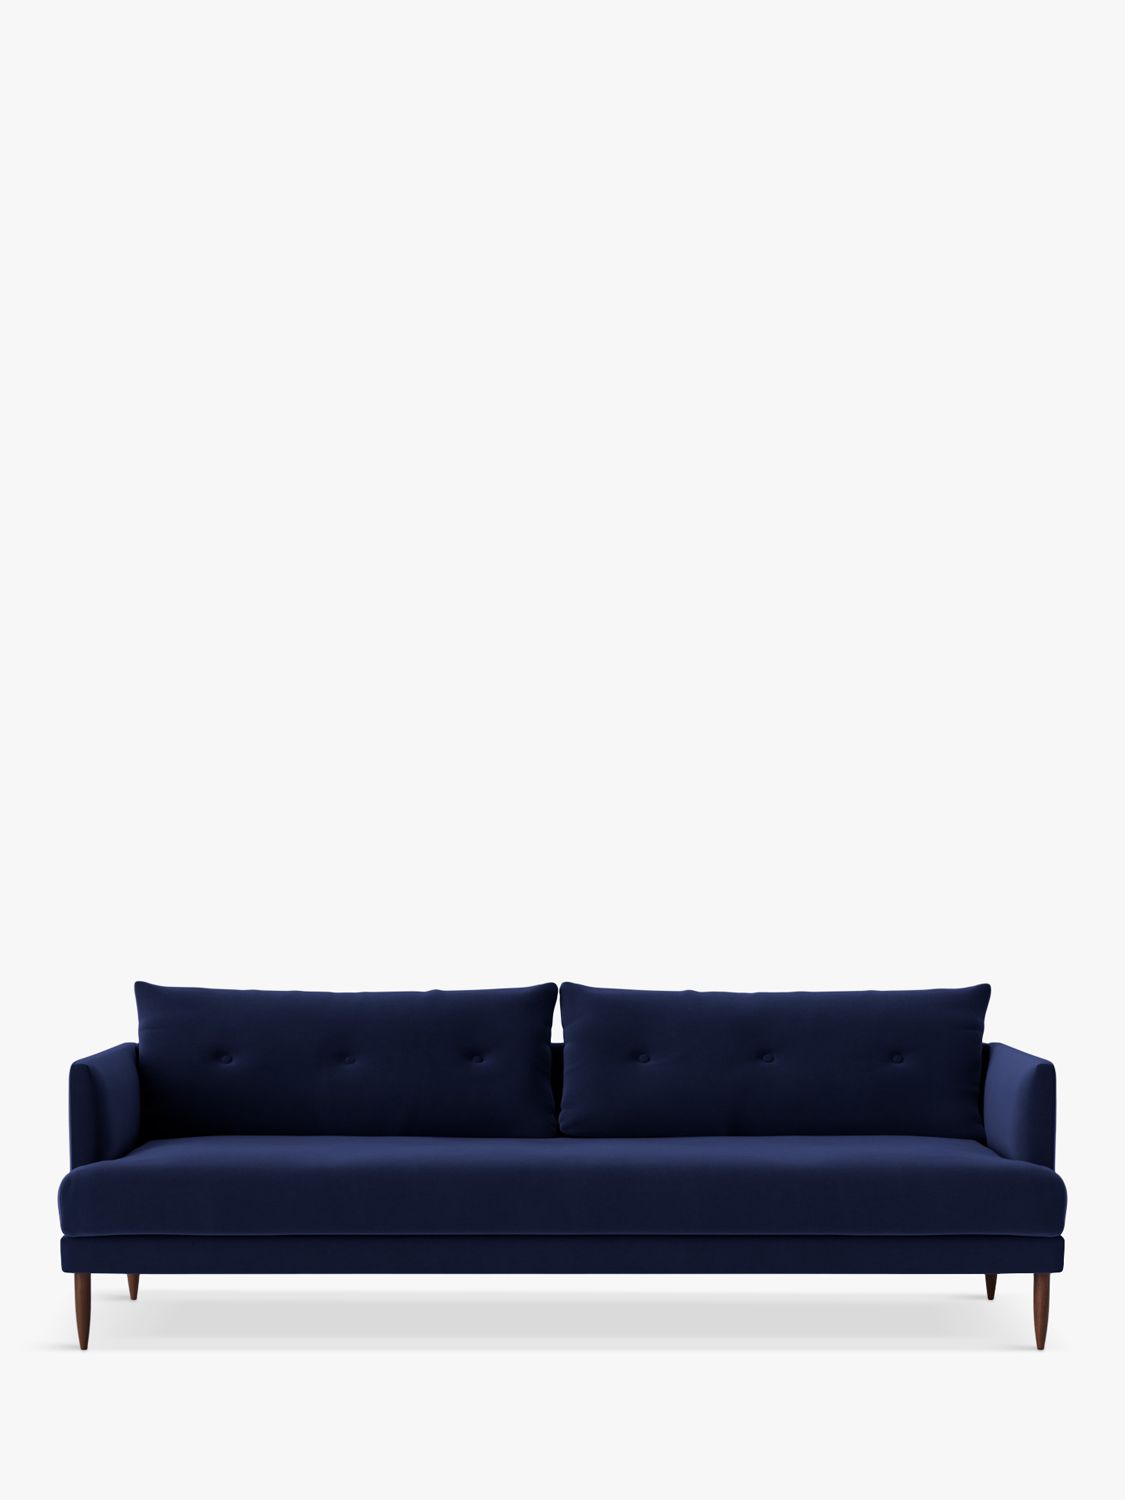 Kalmar Range, Swoon Kalmar Large 3 Seater Sofa, Dark Leg, Ink Velvet